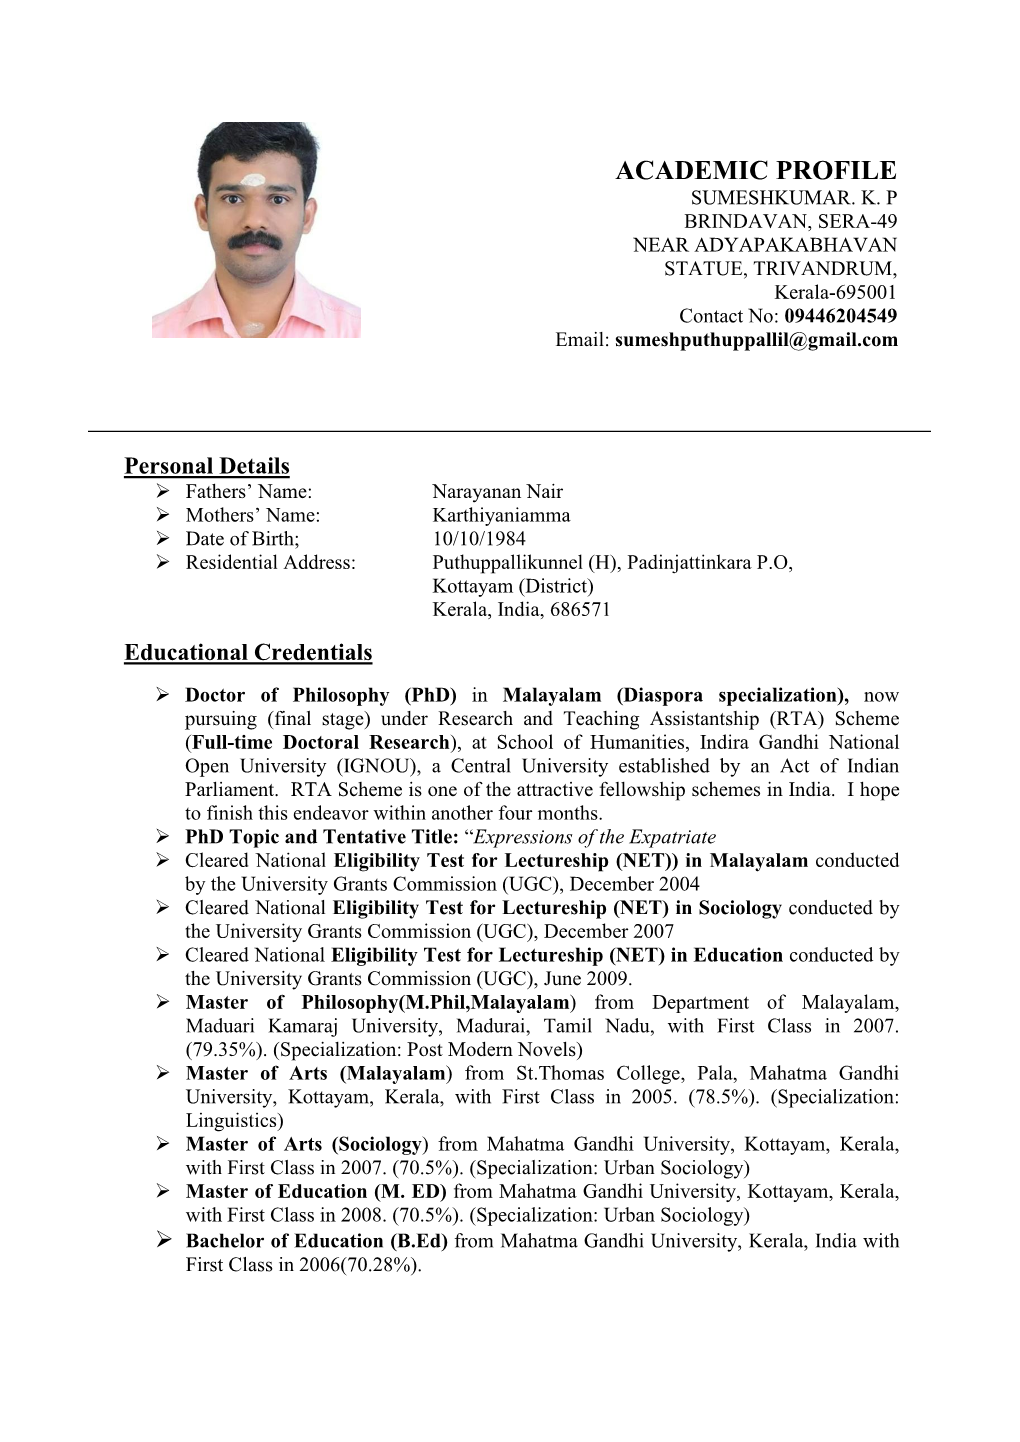 Academic Profile Sumeshkumar